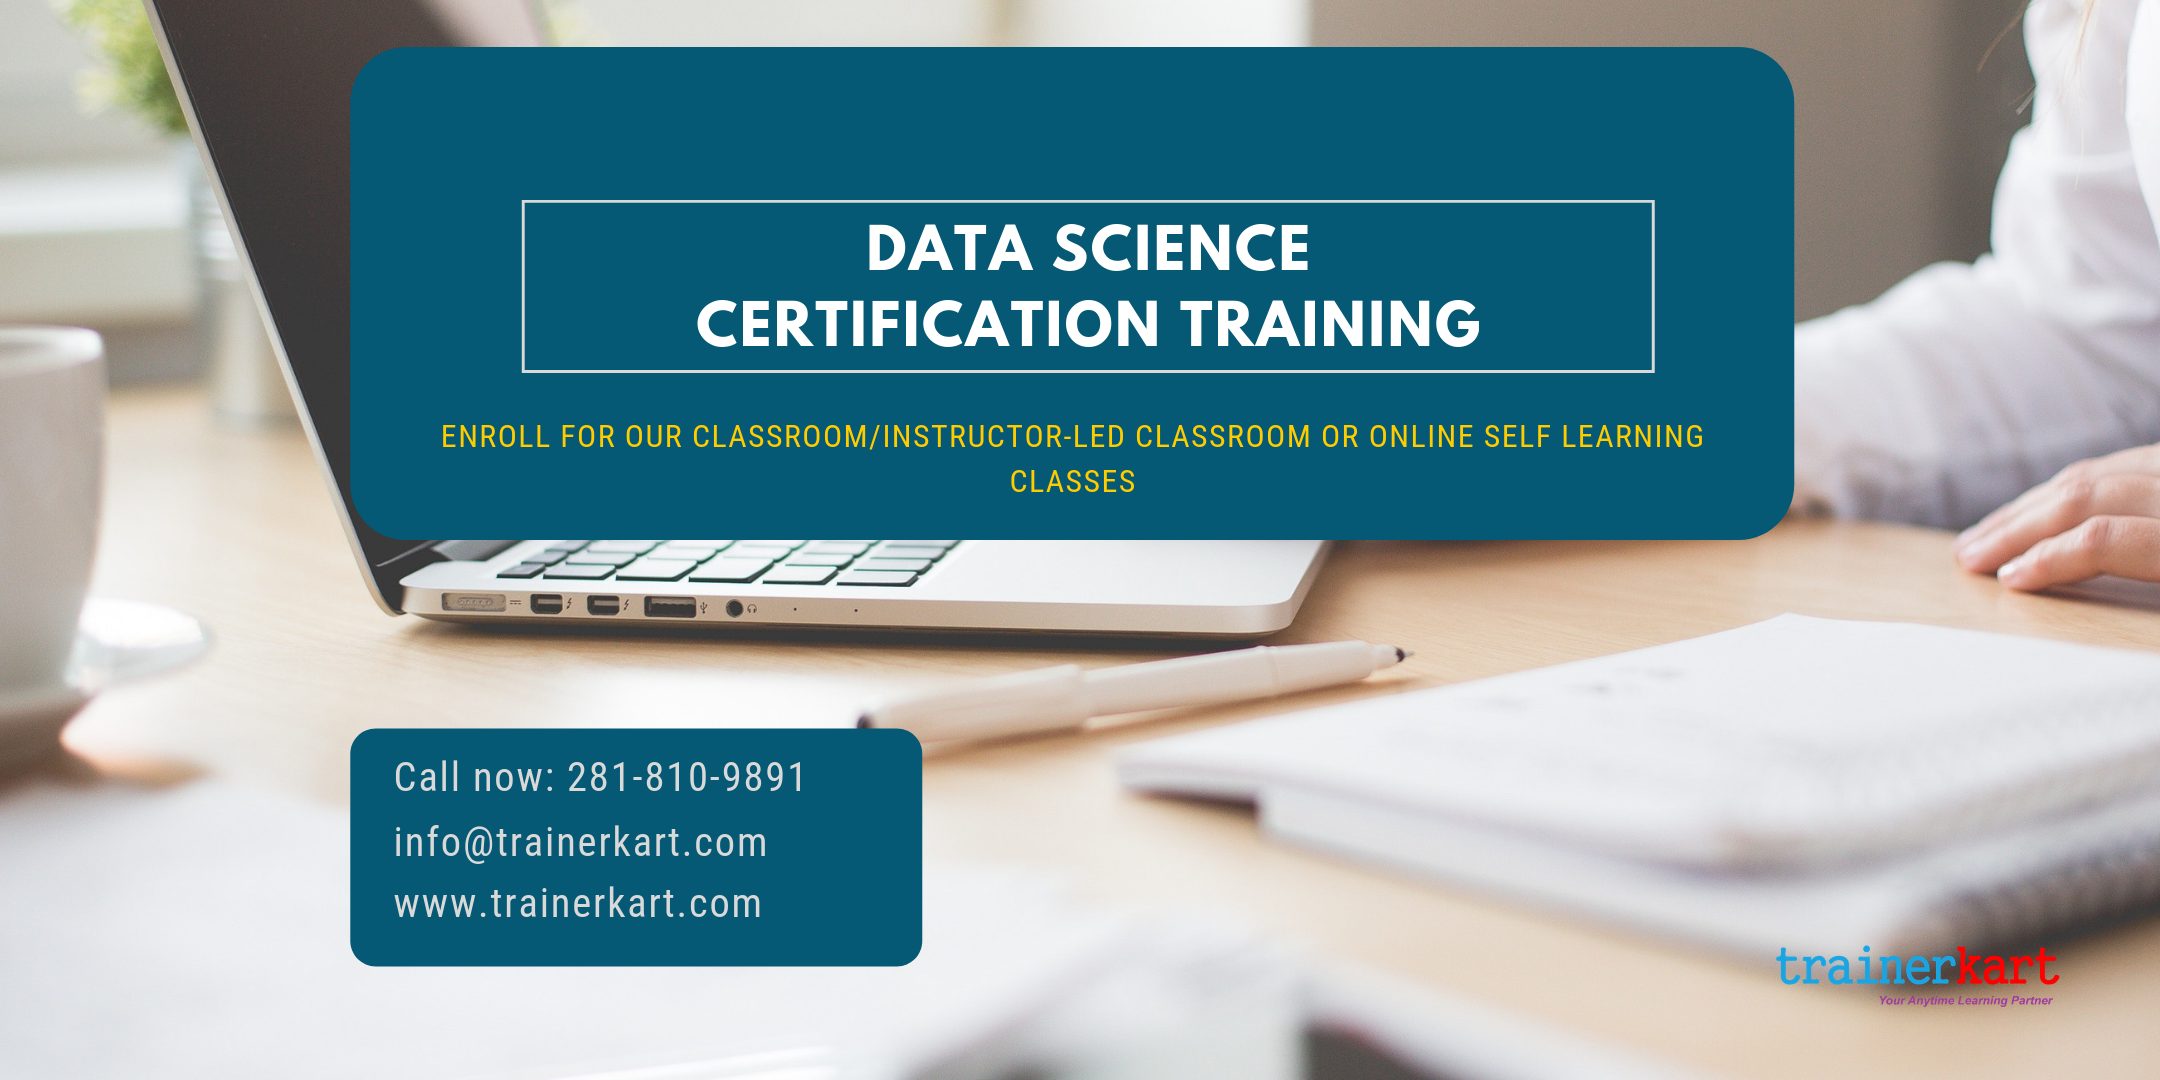 Data Science Certification Training in Bangor, ME